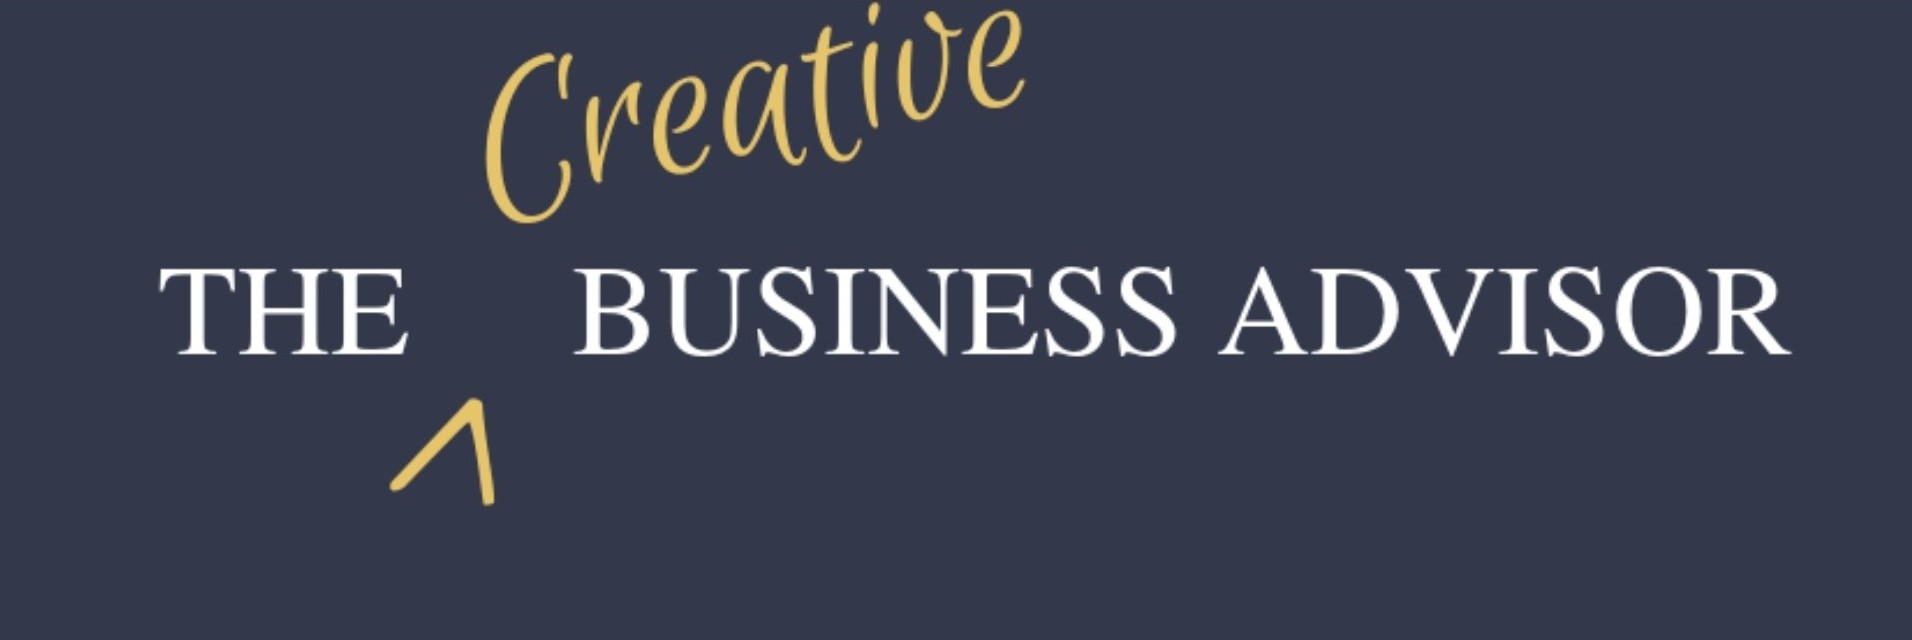 The Creative Business Advisor